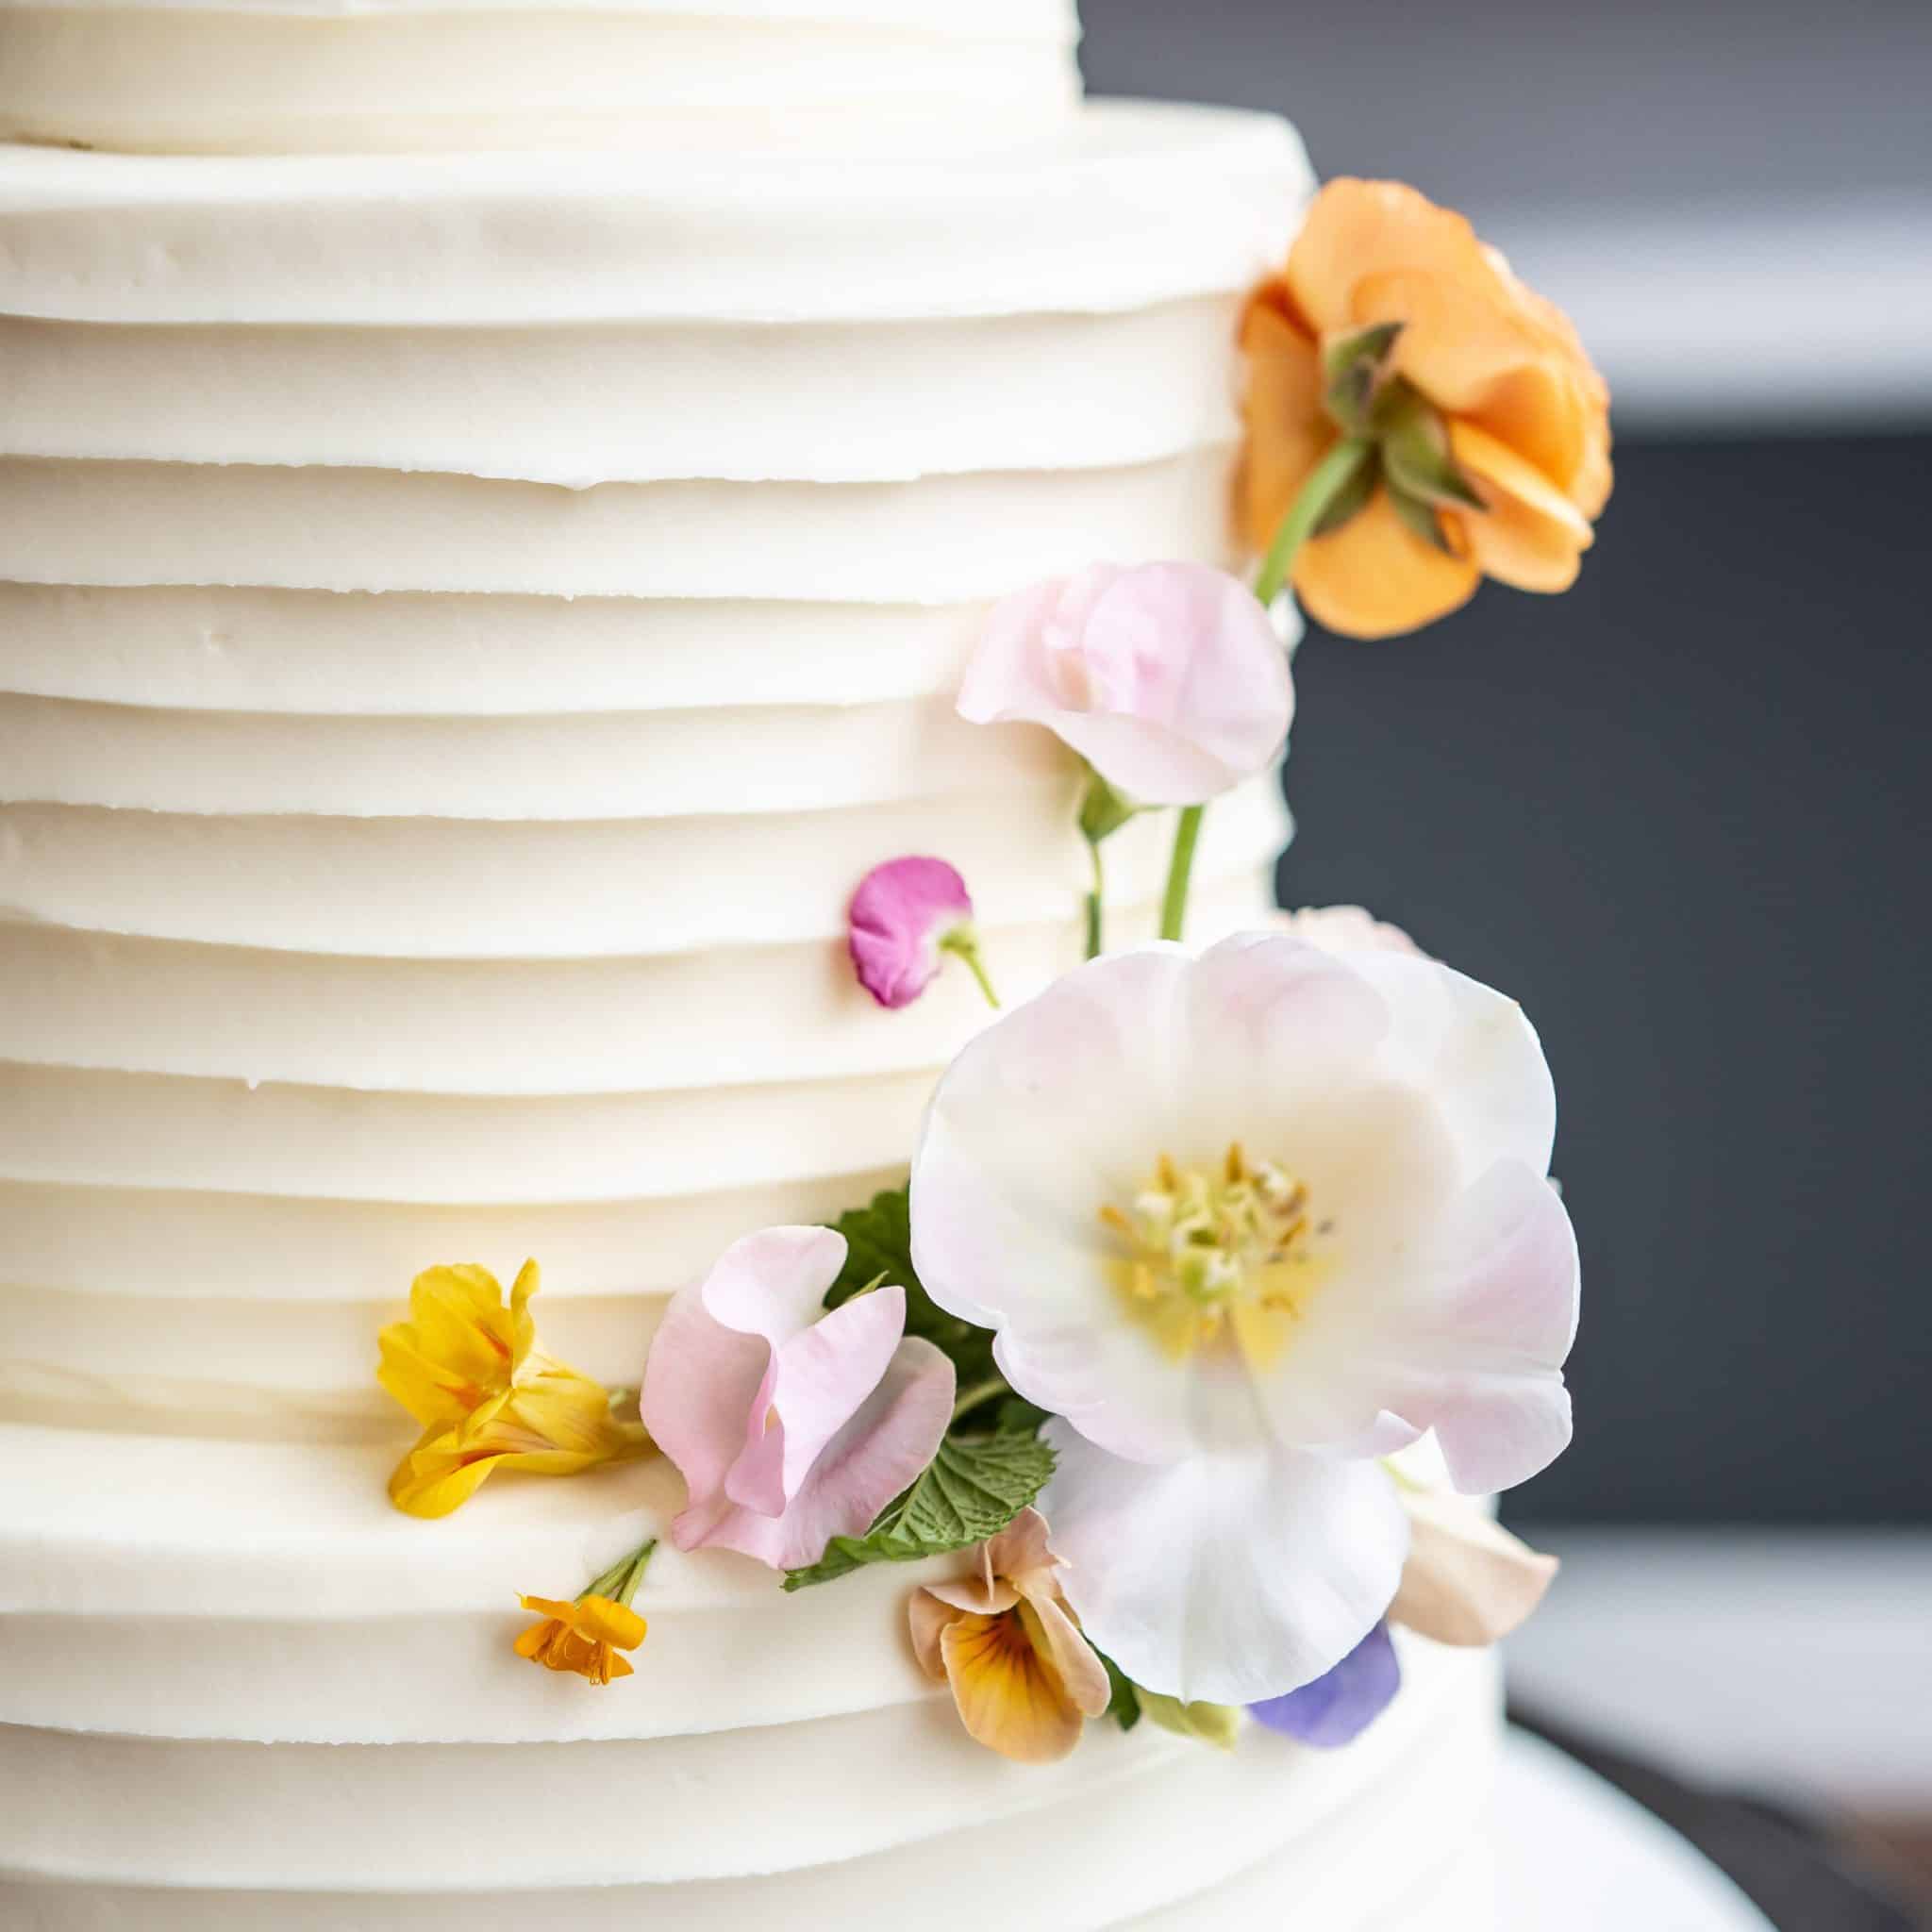 Nashville Sweets | Custom Cakes, Weddings & Desserts Bakery